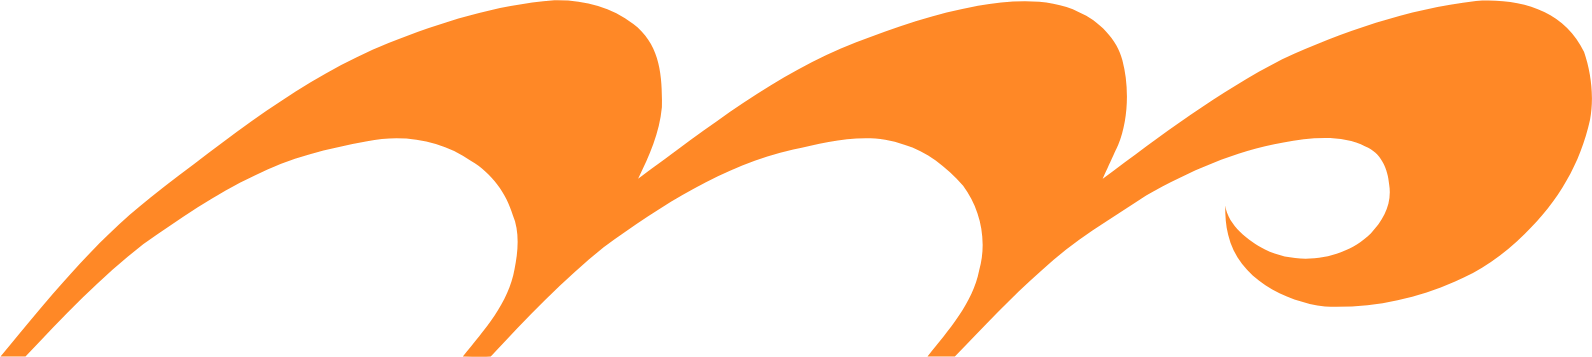 Mid Penn Bancorp logo (transparent PNG)